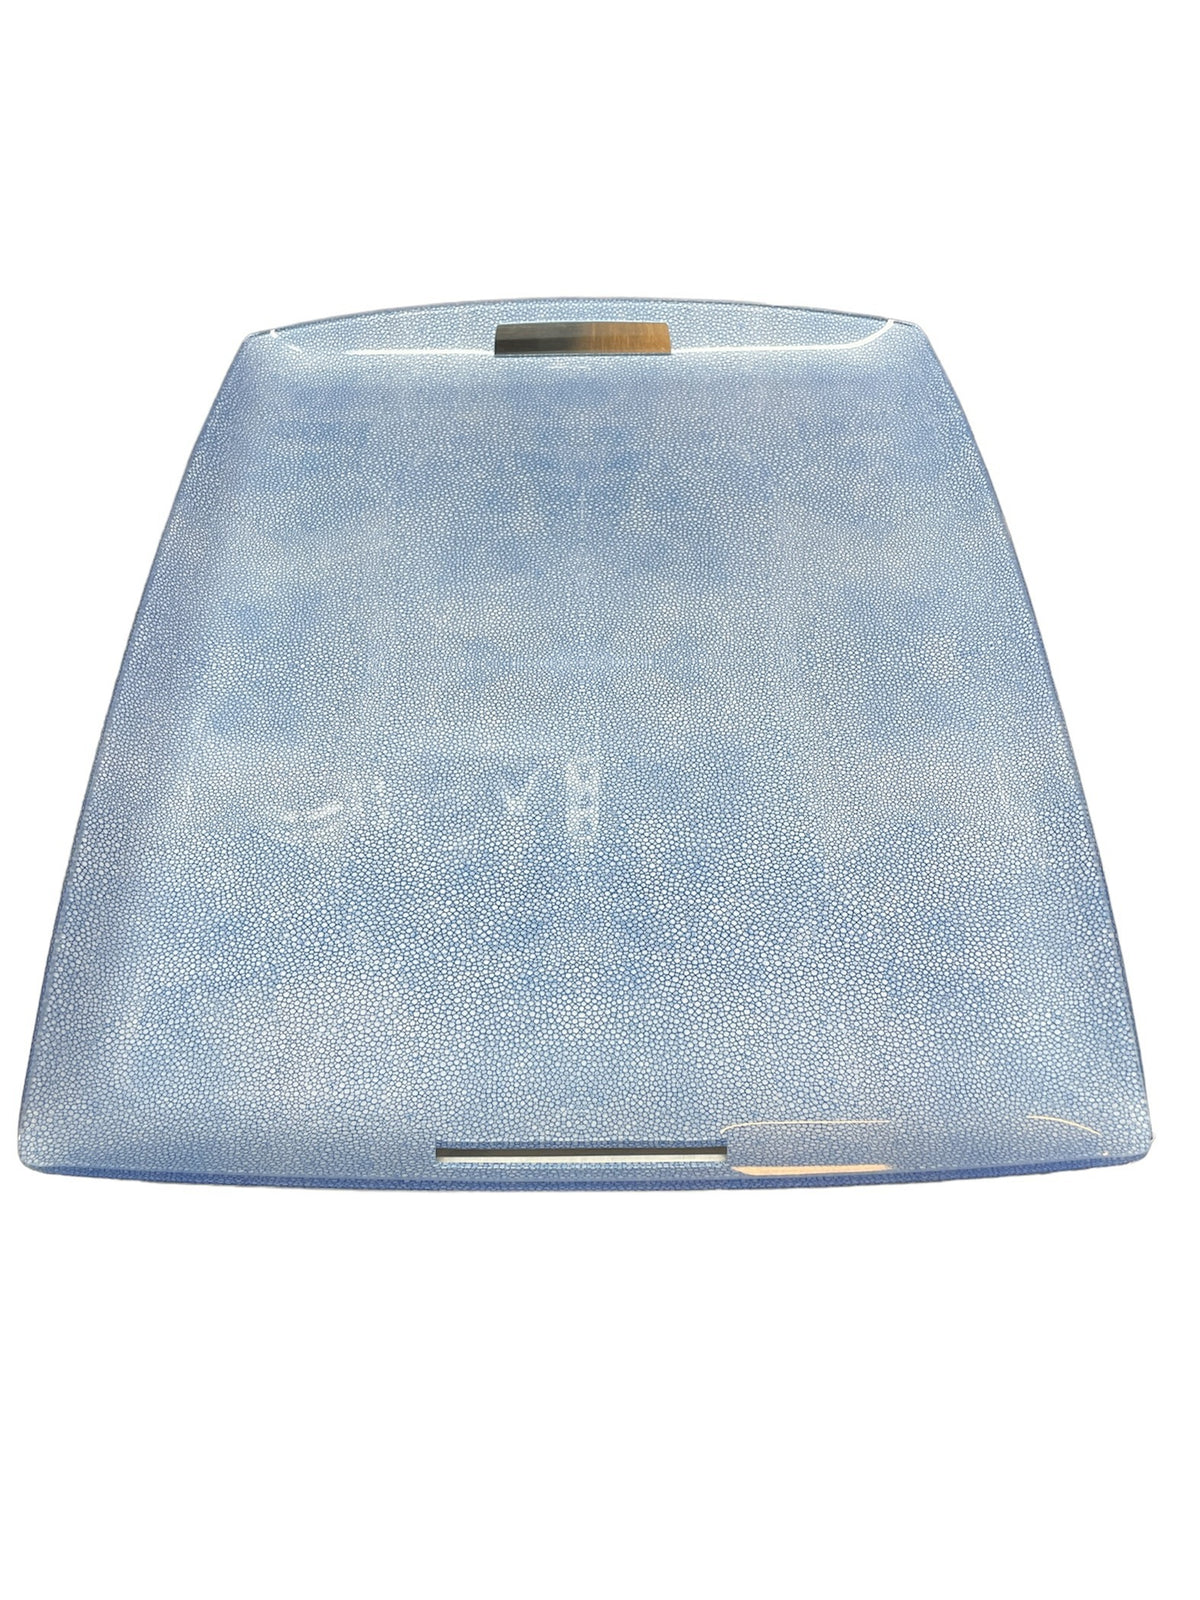 Shagreen Acrylic Handled Serving Tray X-Large -  Blue